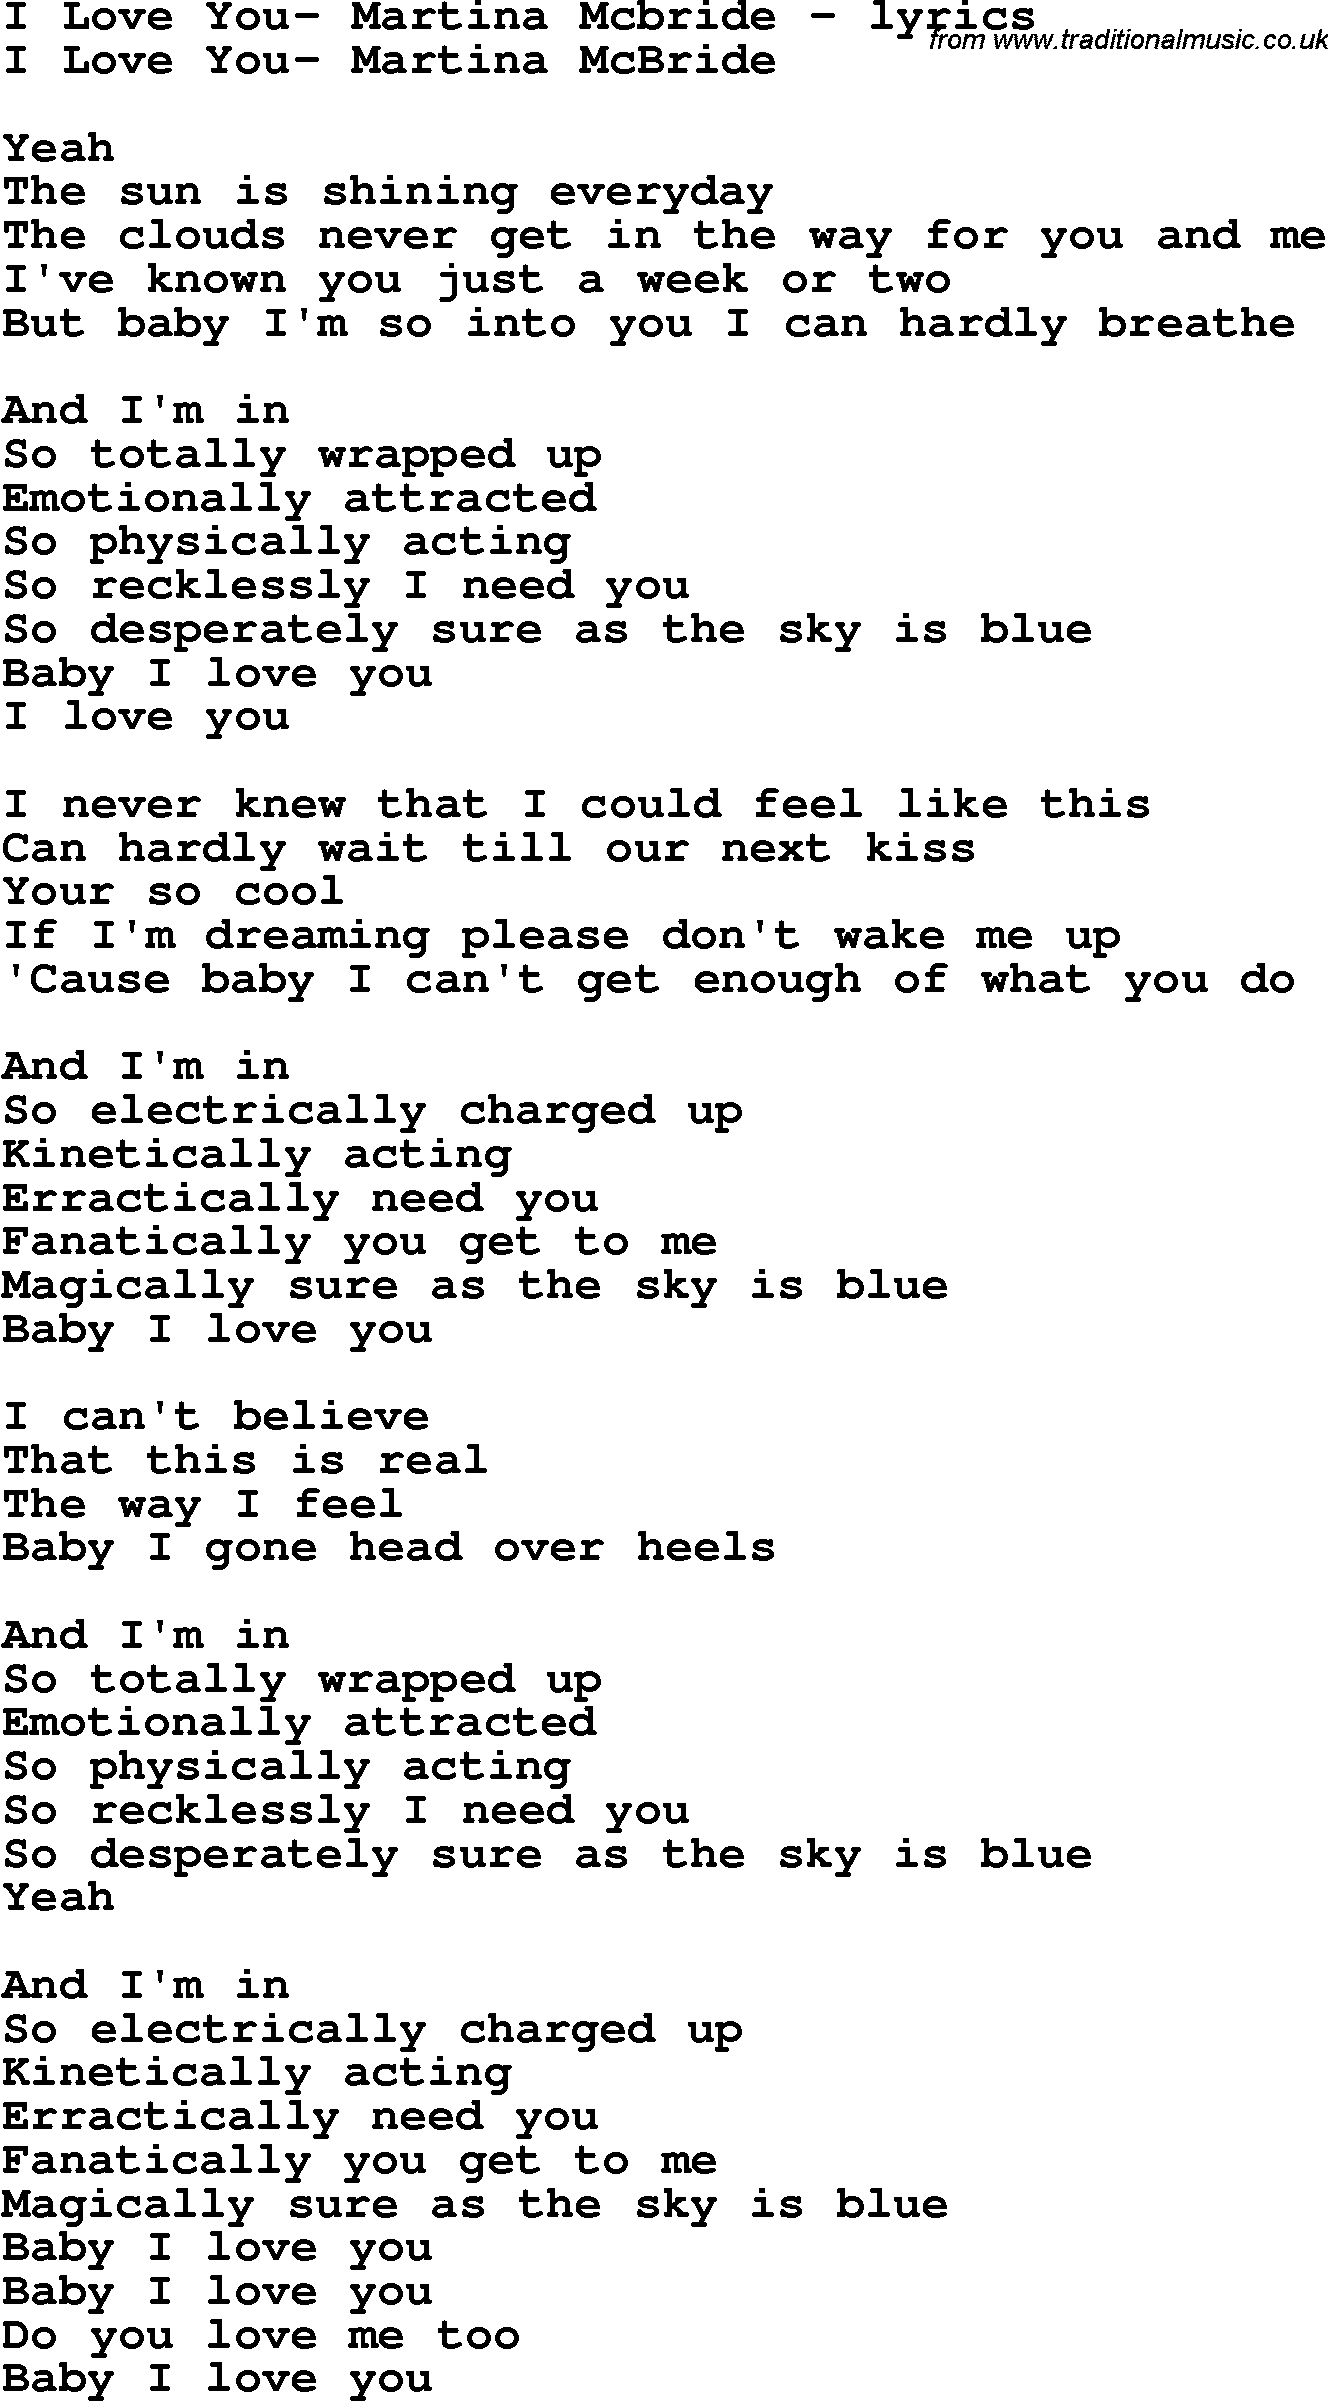 Love Song Lyrics For I Love You Martina Mcbride